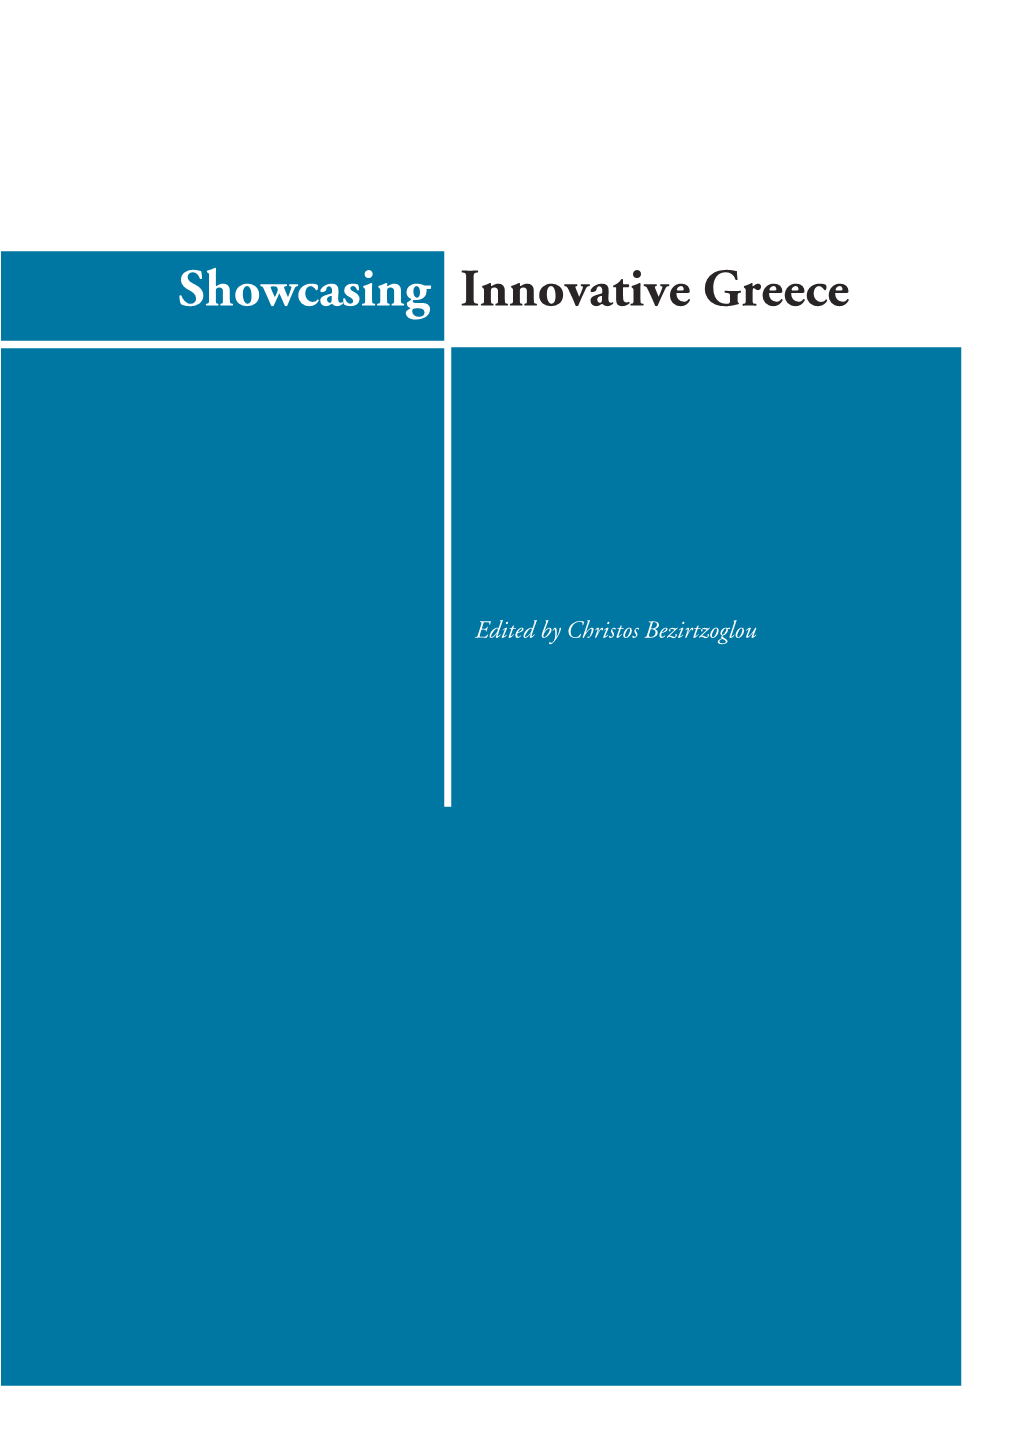 Showcasing Innovative Greece